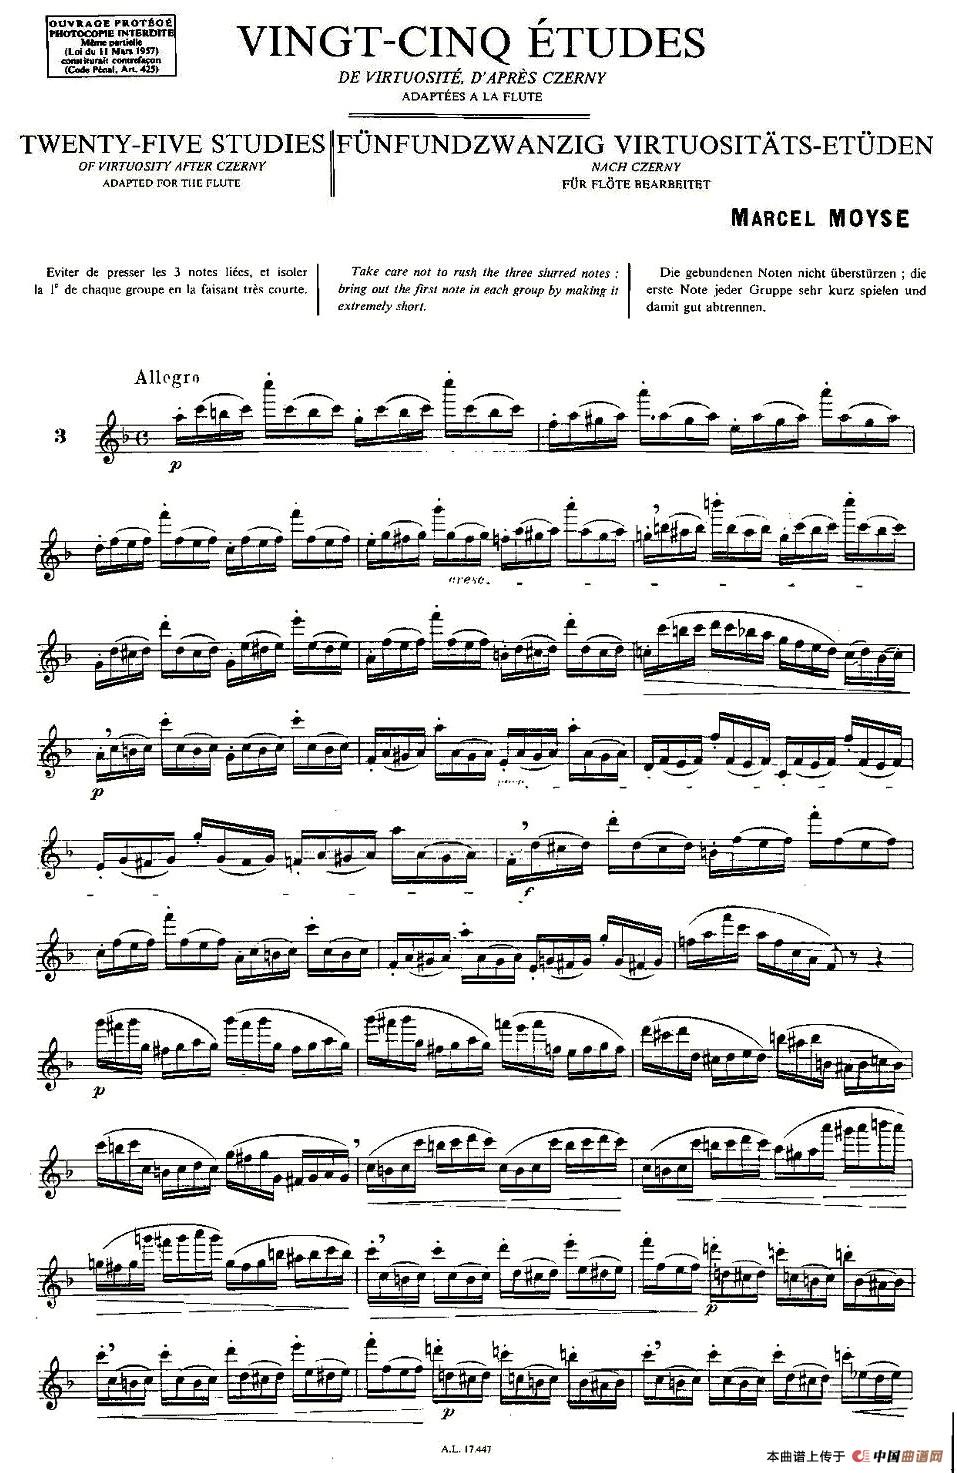 Moyse - 25 Studies after Czerny flute  [3]（25首改编自车尔